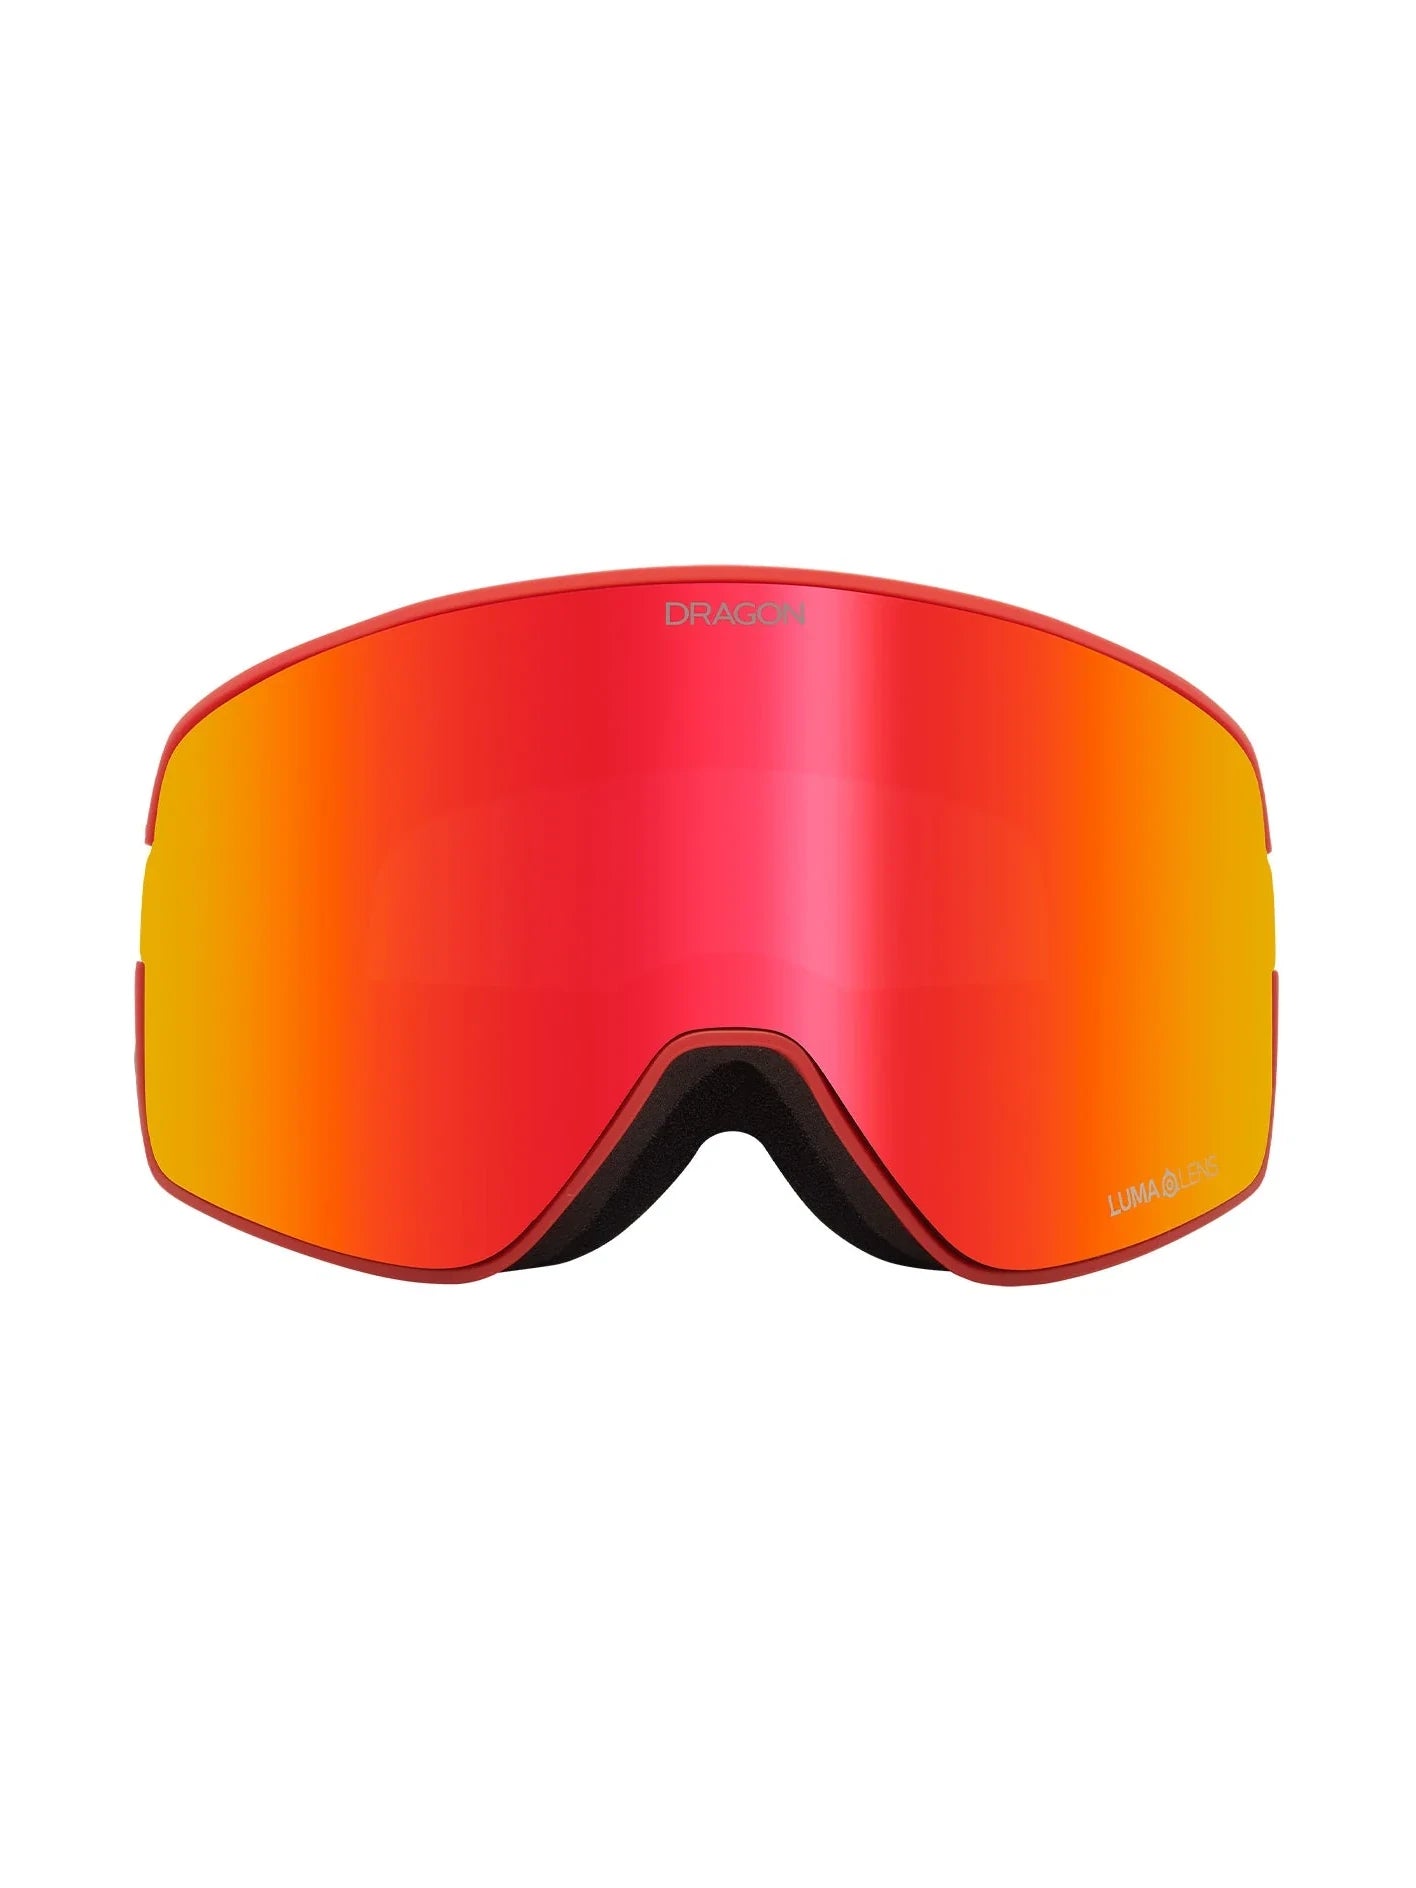 Dragon NFX2 - Volcano Spyder Collab with Lumalens Red Ionized & Lumalens Light Rose Lens | Dragon | Gafas de snowboard | Snowboard Shop | surfdevils.com